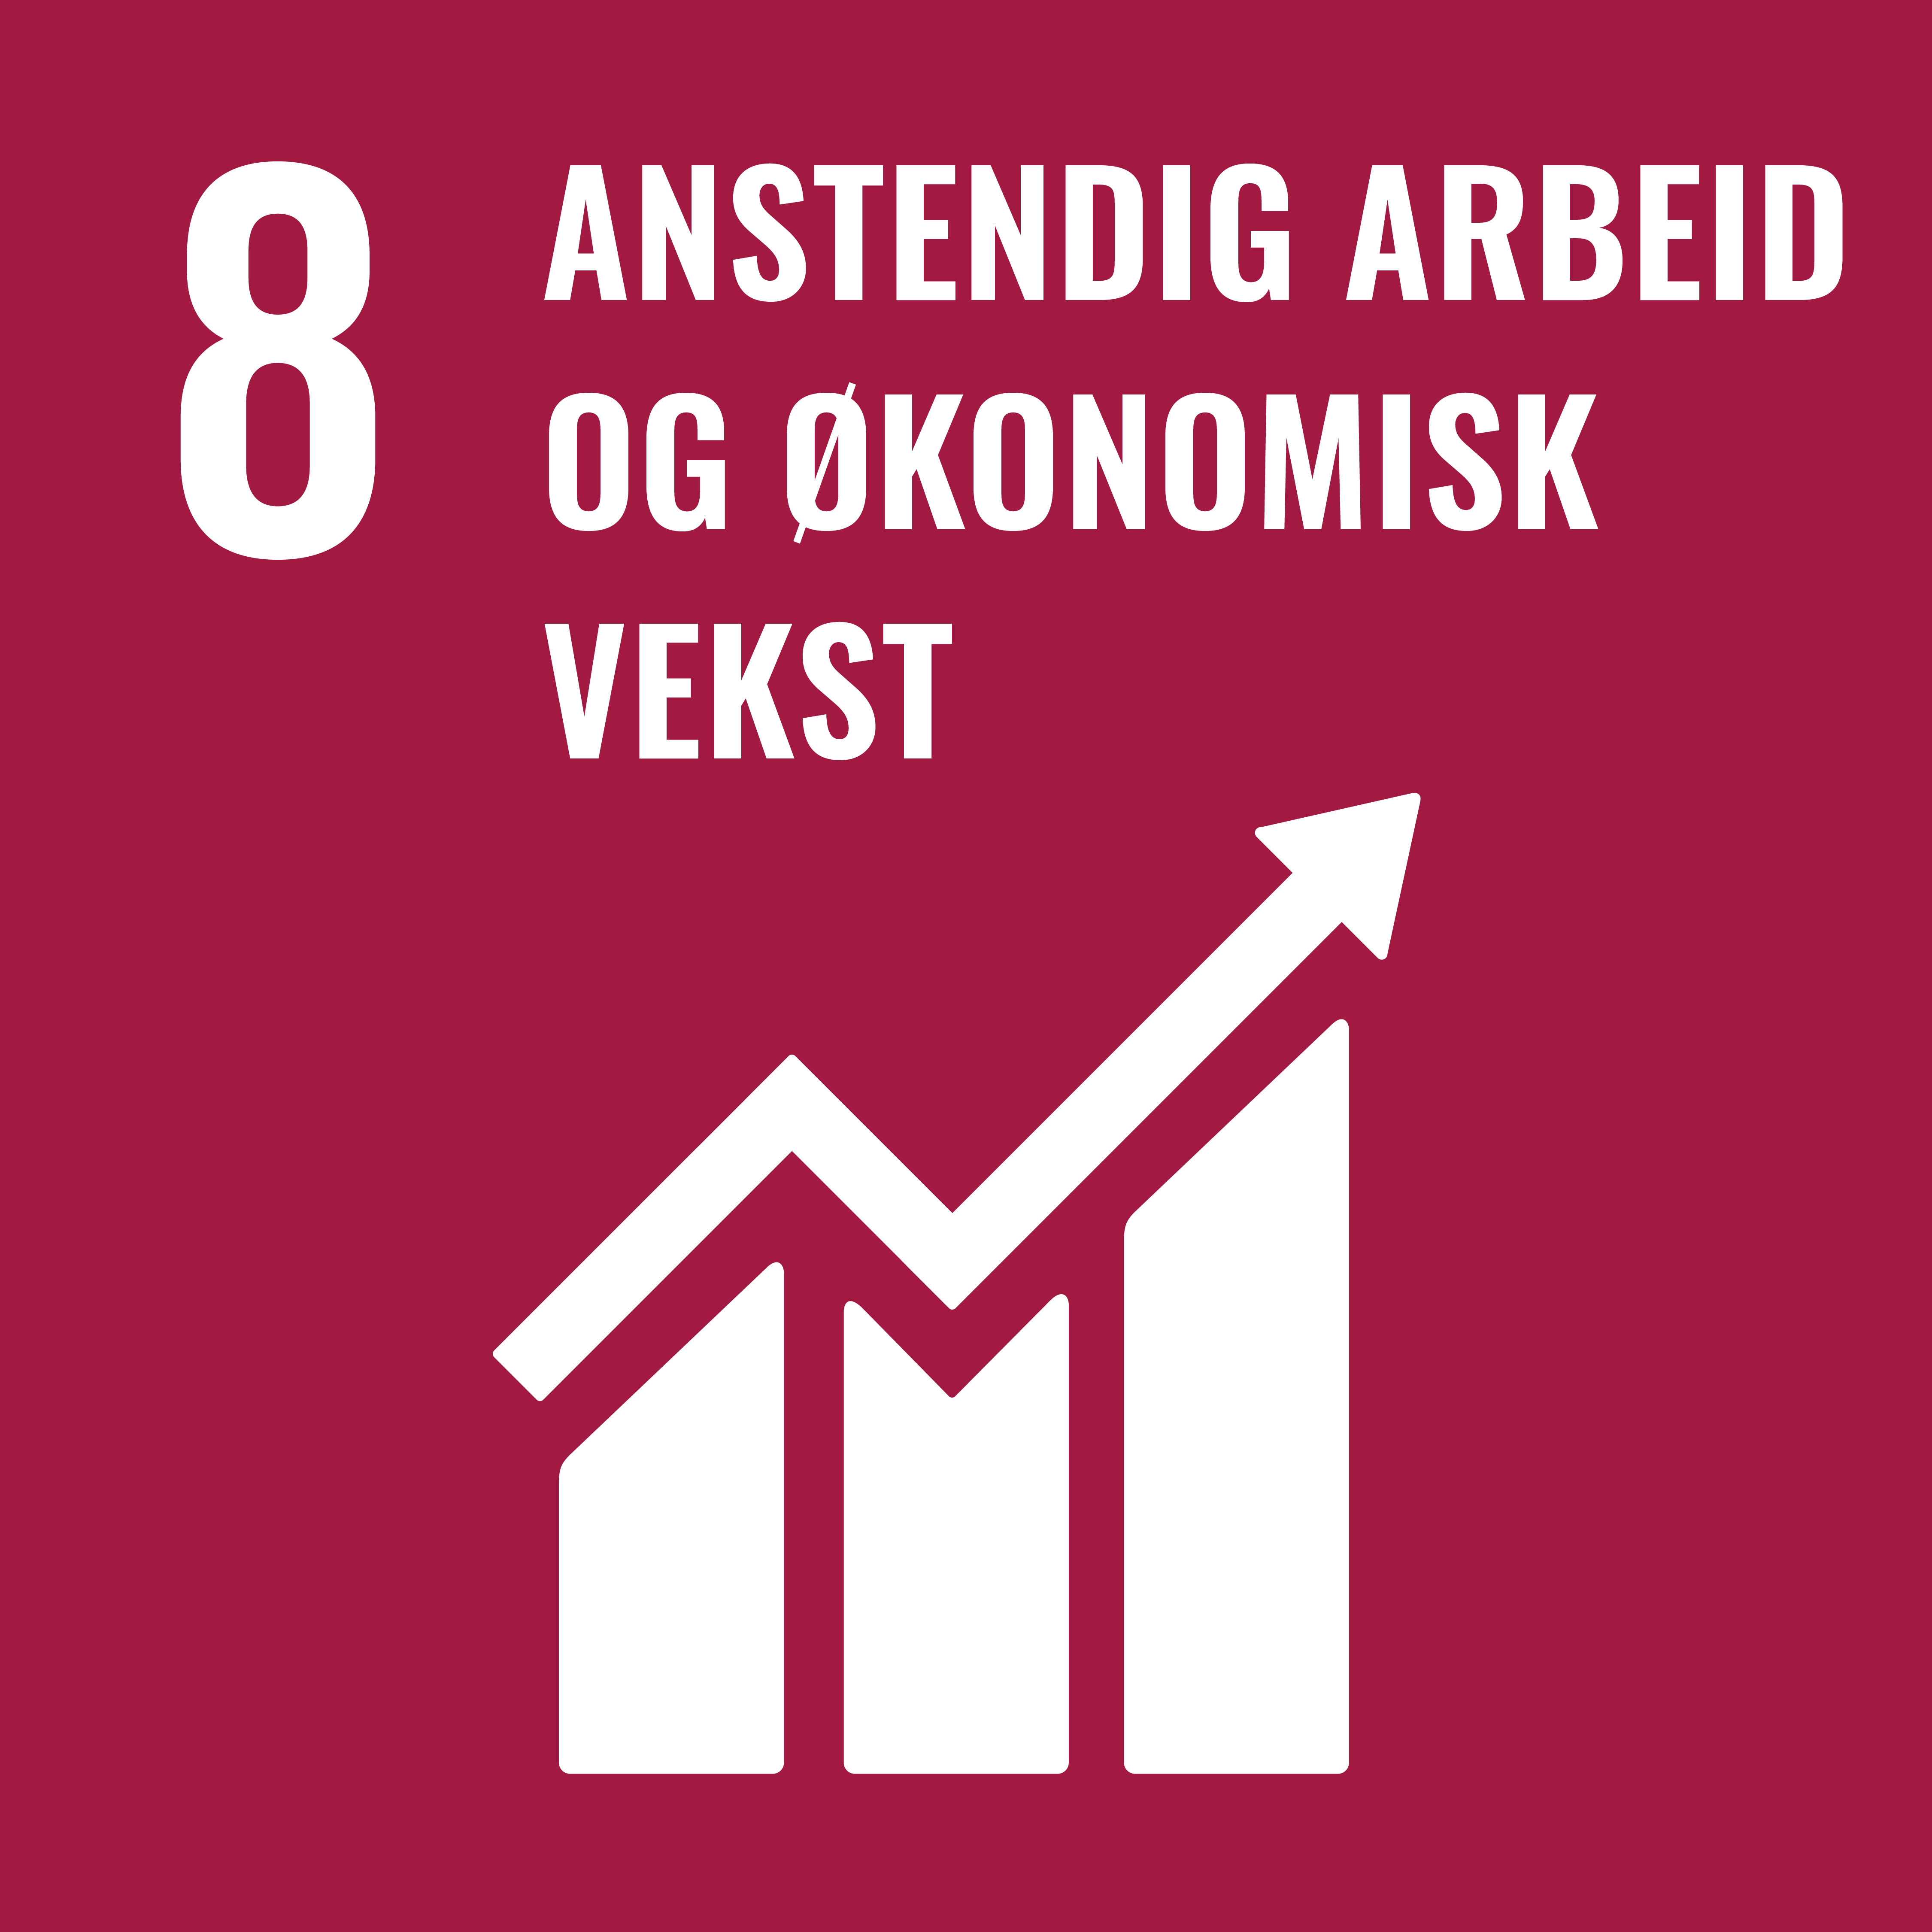 FNs bærekraftsmål nummer 8 Anstendig arbeid og økonomisk vekst. Lenke til FNs bærekraftsmål nummer 8.